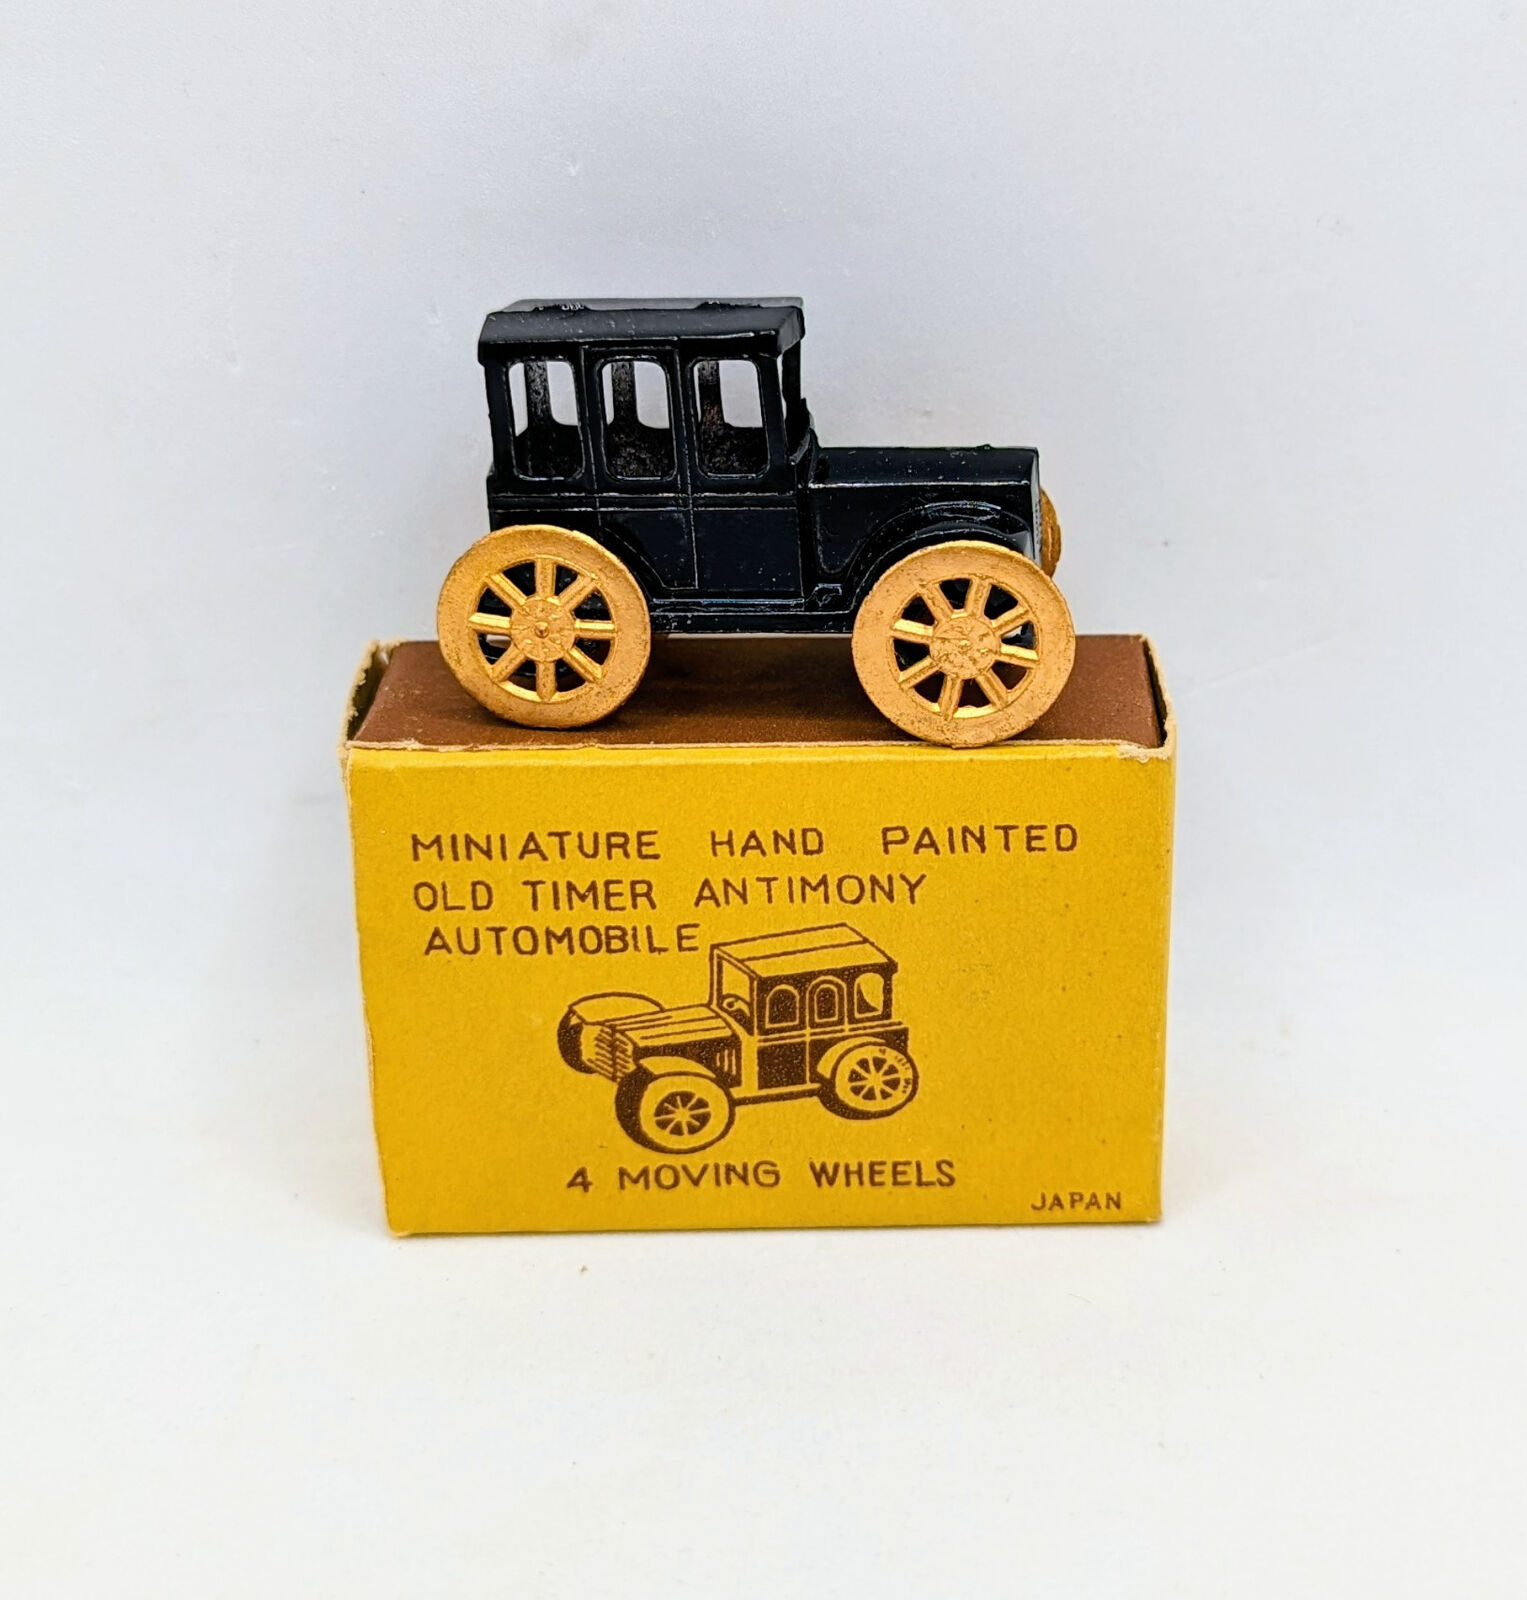 Vintage Miniature Hand Painted Old Timer Antimony Automobile Japan